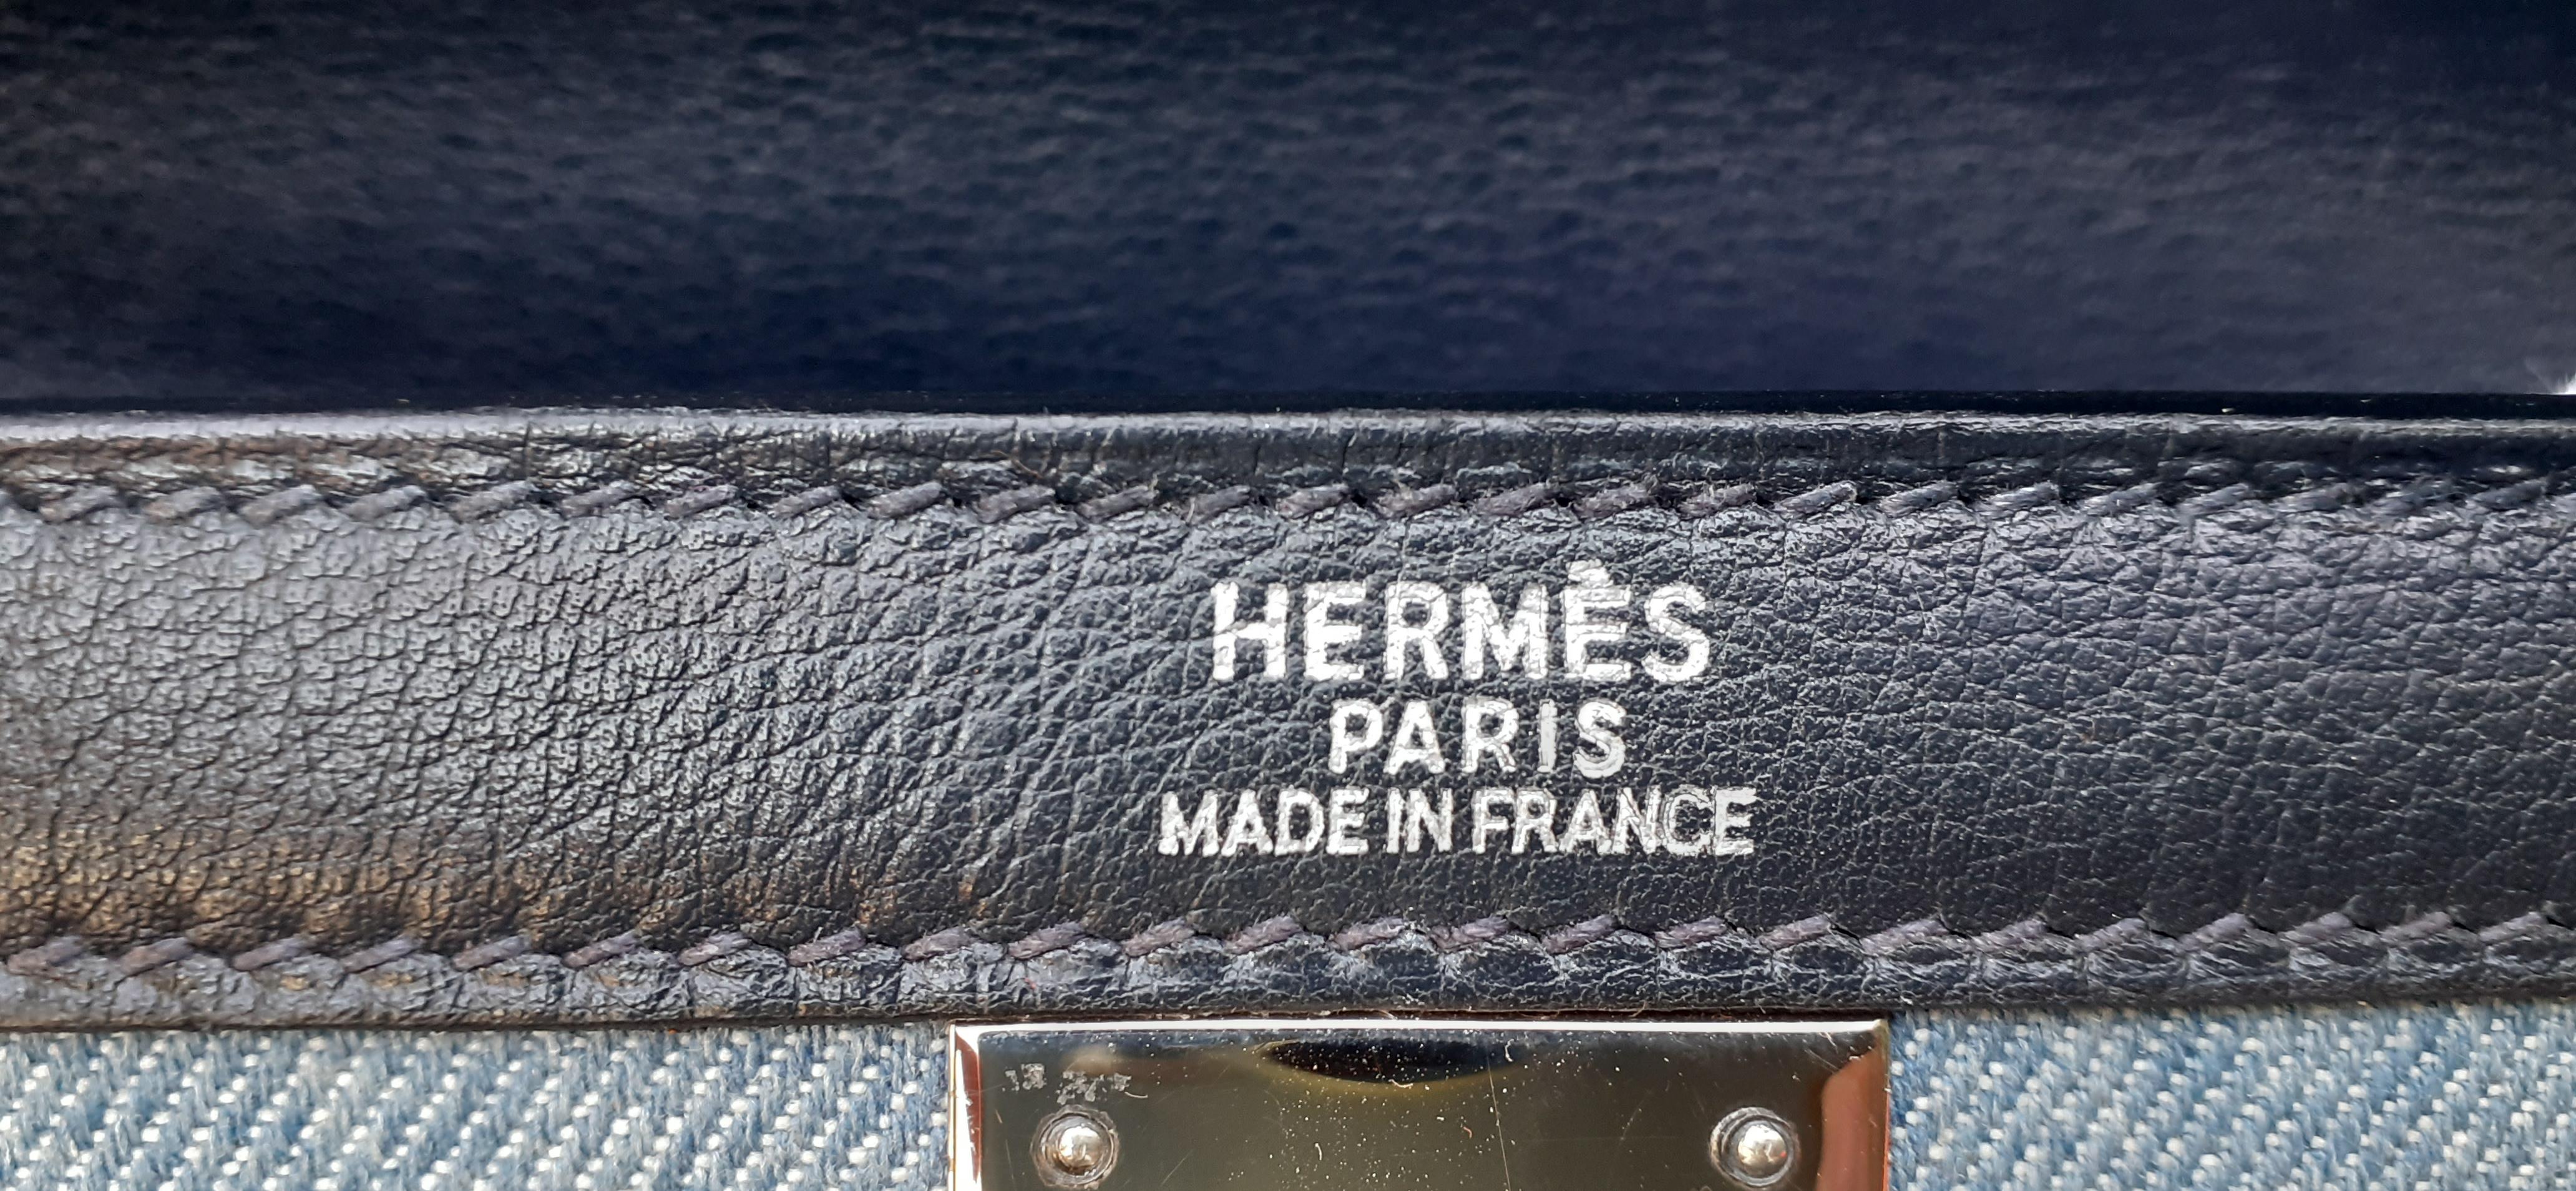 Beautiful Authentic Hermès Bag

